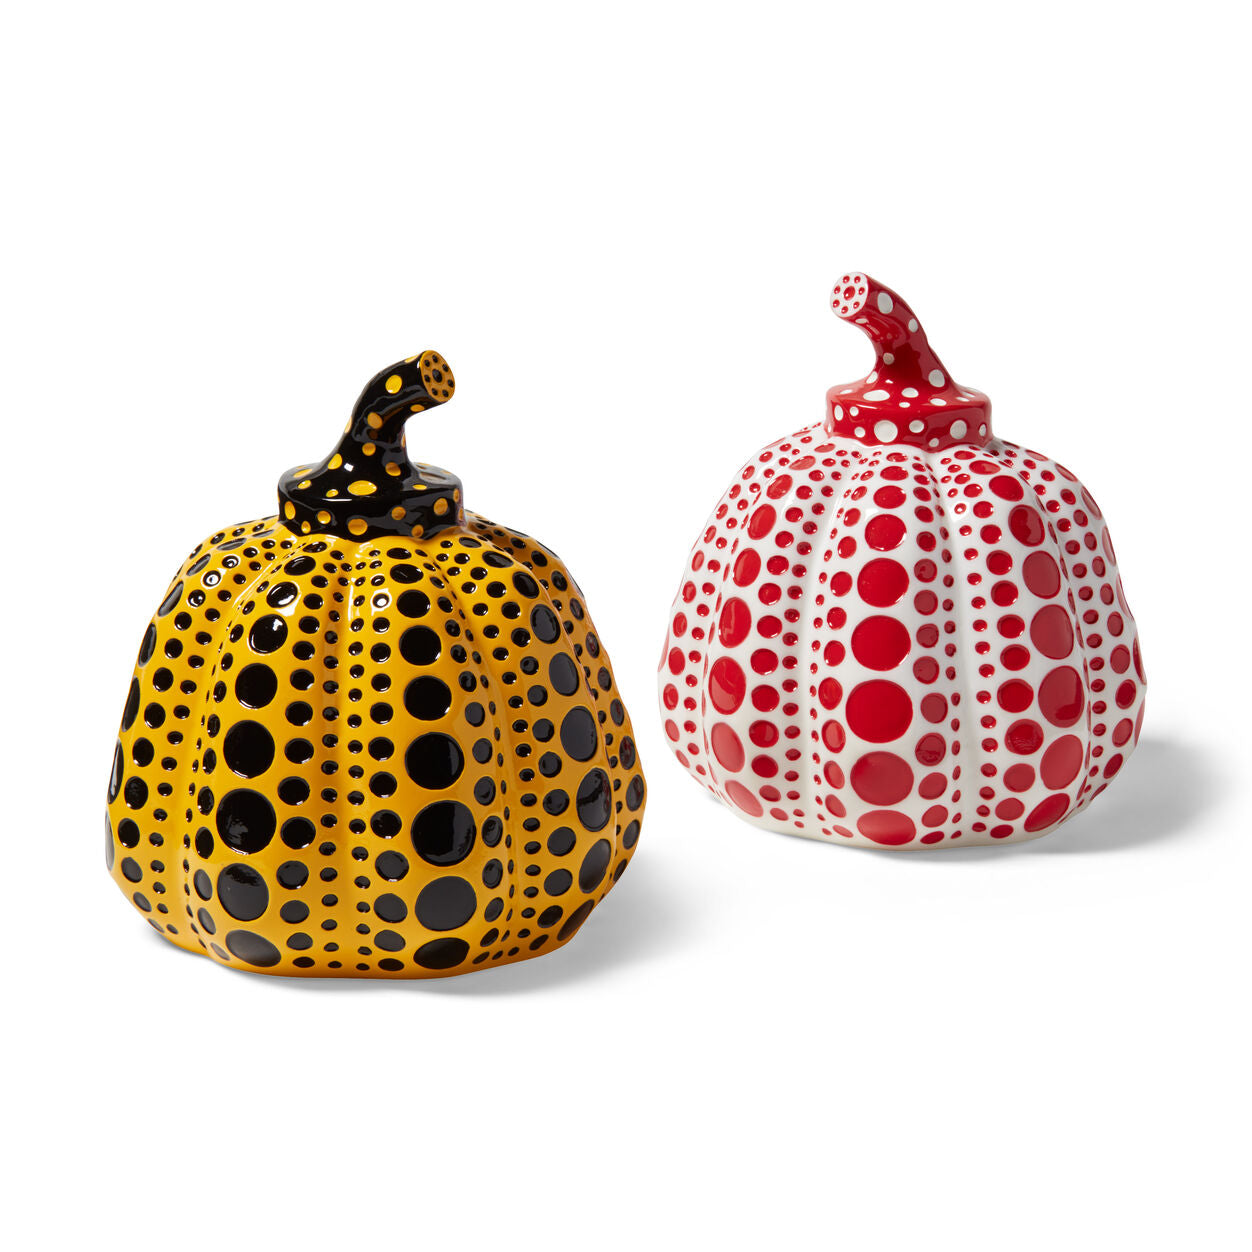 Yayoi Kusama, 'Pumpkins', 2015 | Available for Sale | Image of both Pumpkins